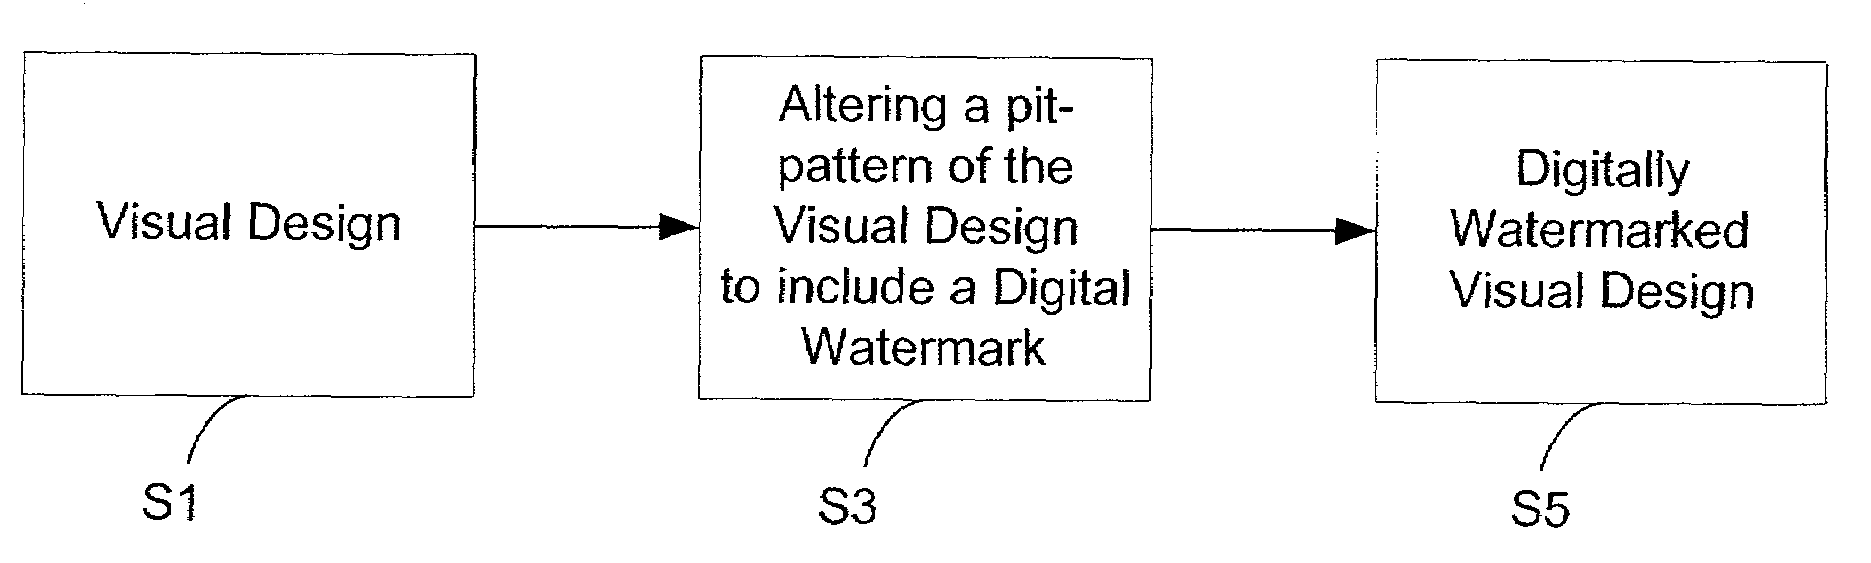 Digitally watermarking physical media